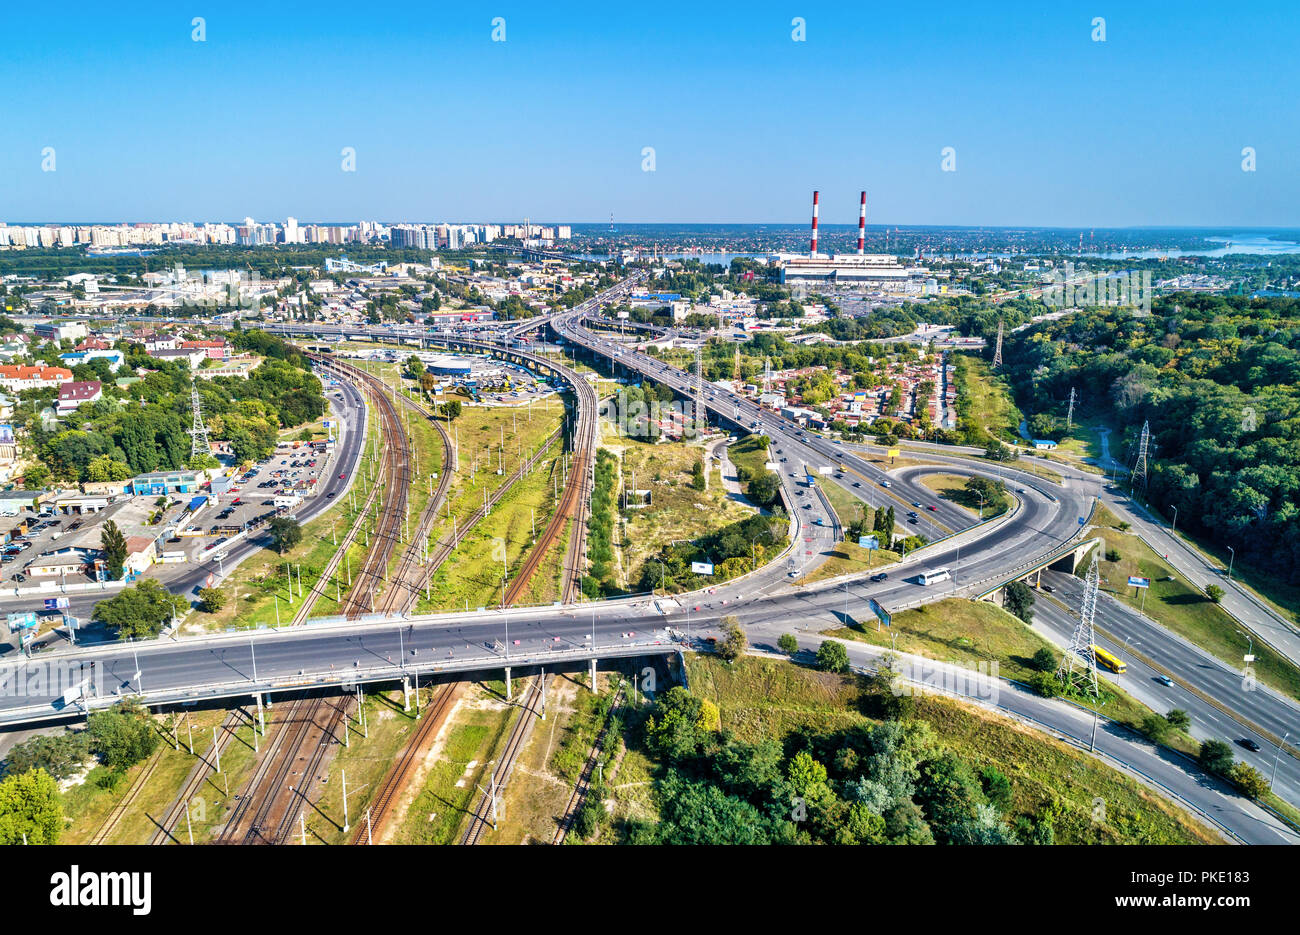 Aerial view of a road and railway interchange in Kiev, Ukraine Stock Photo